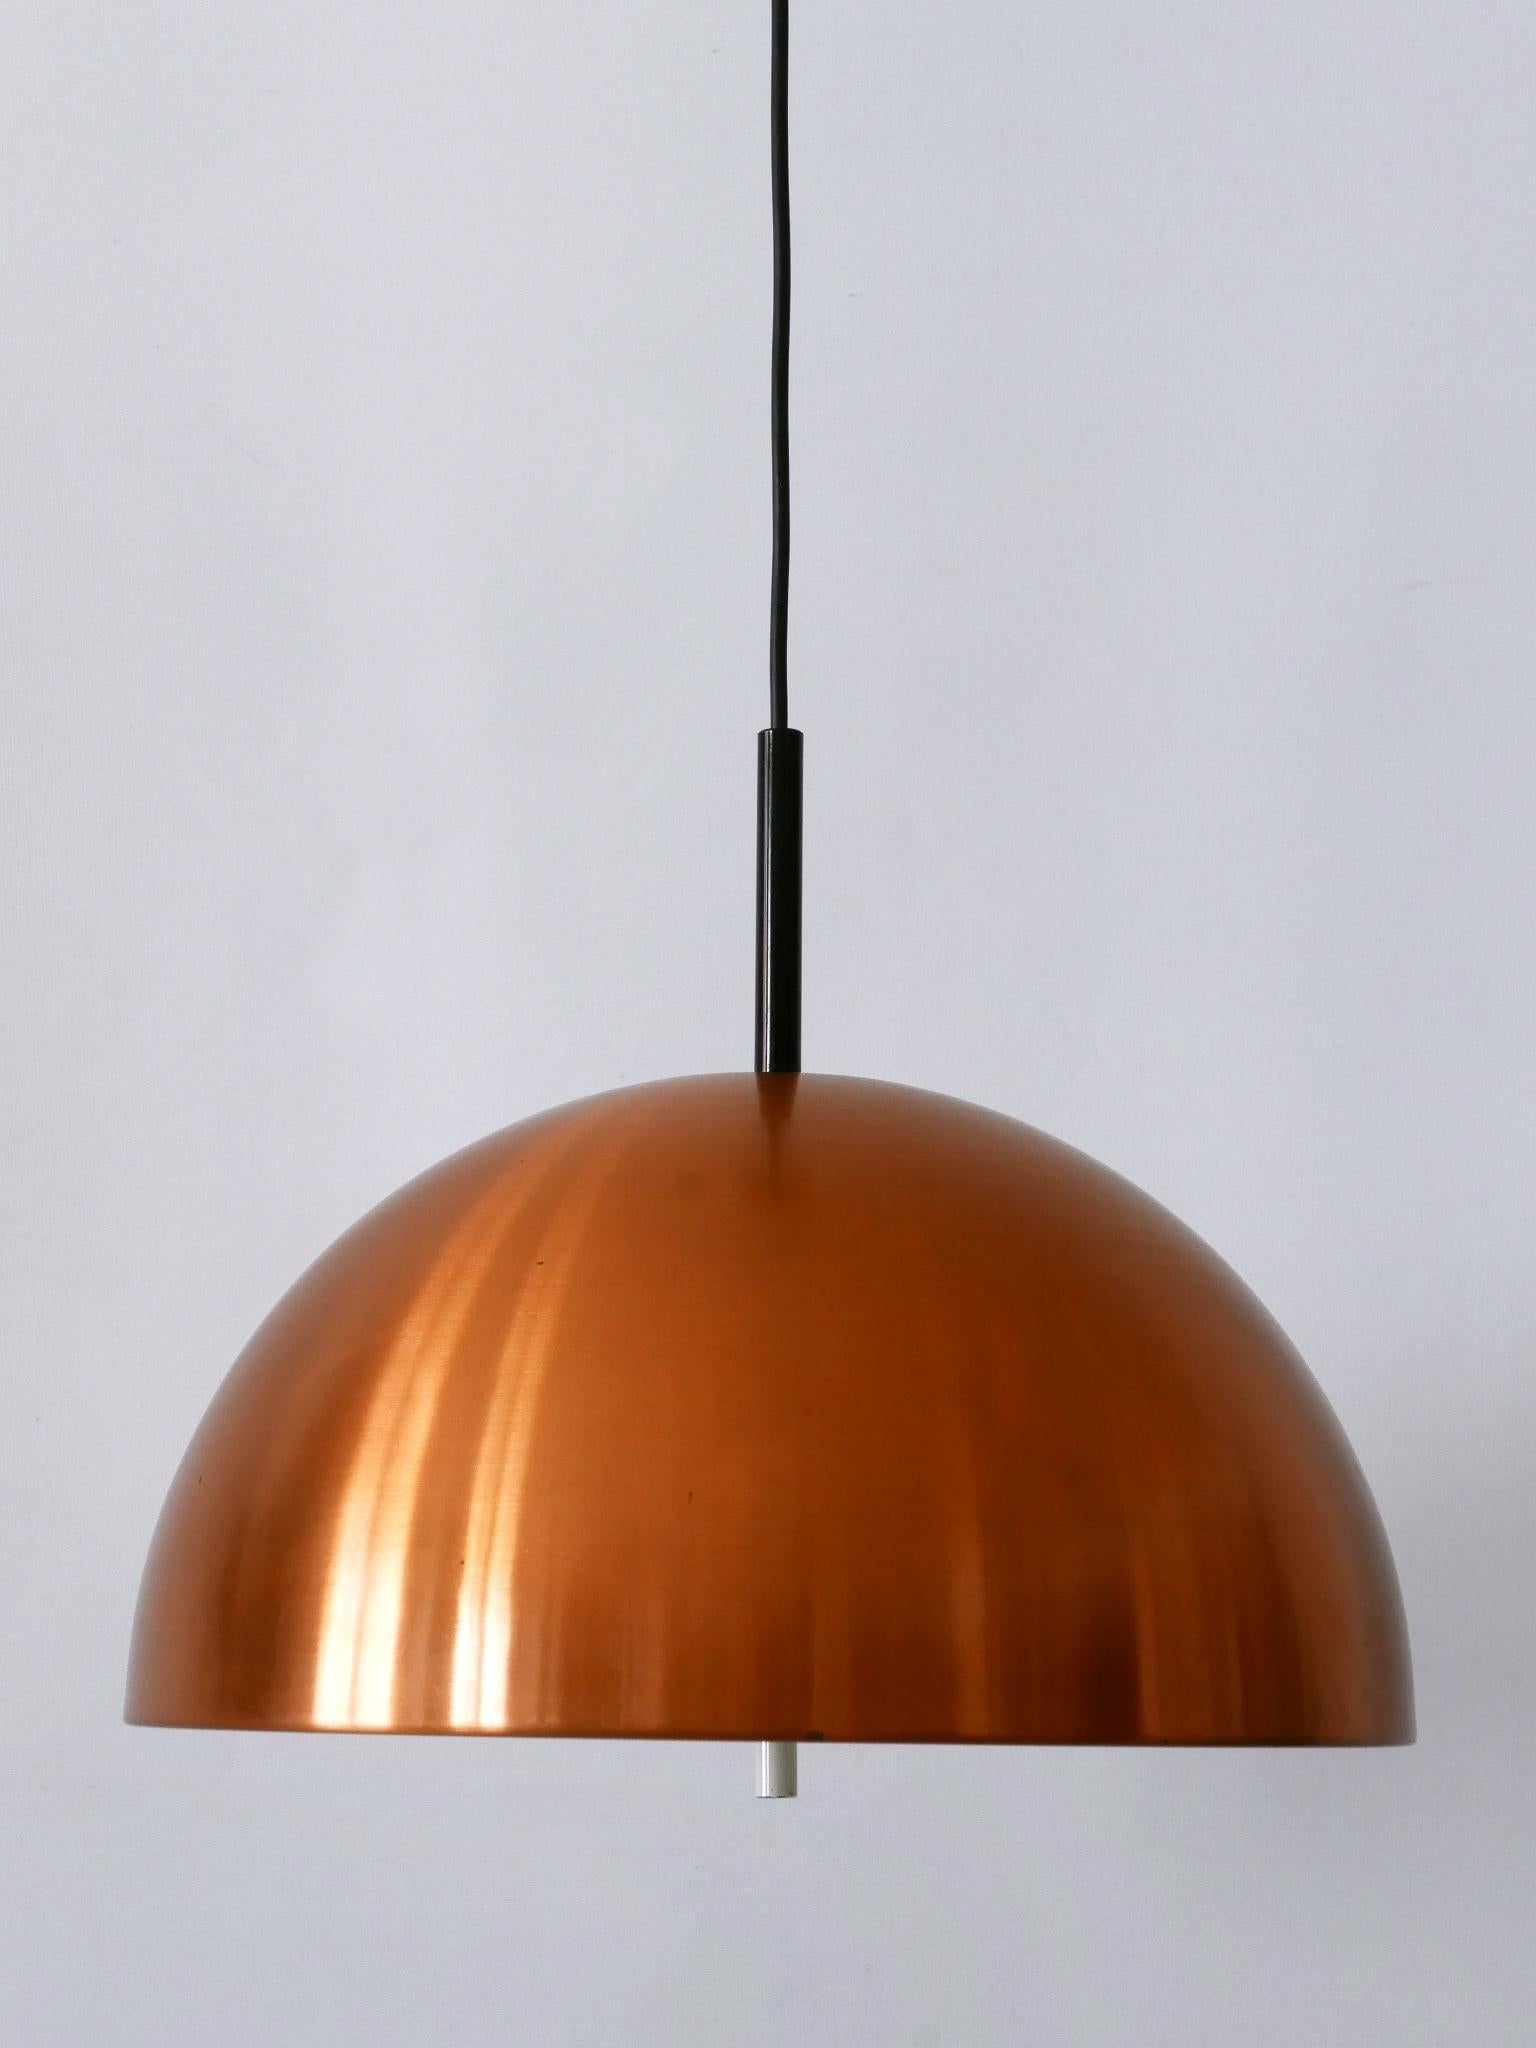 Elegant Mid-Century Modern Copper Pendant Lamp by Staff & Schwarz Germany 1960s For Sale 9